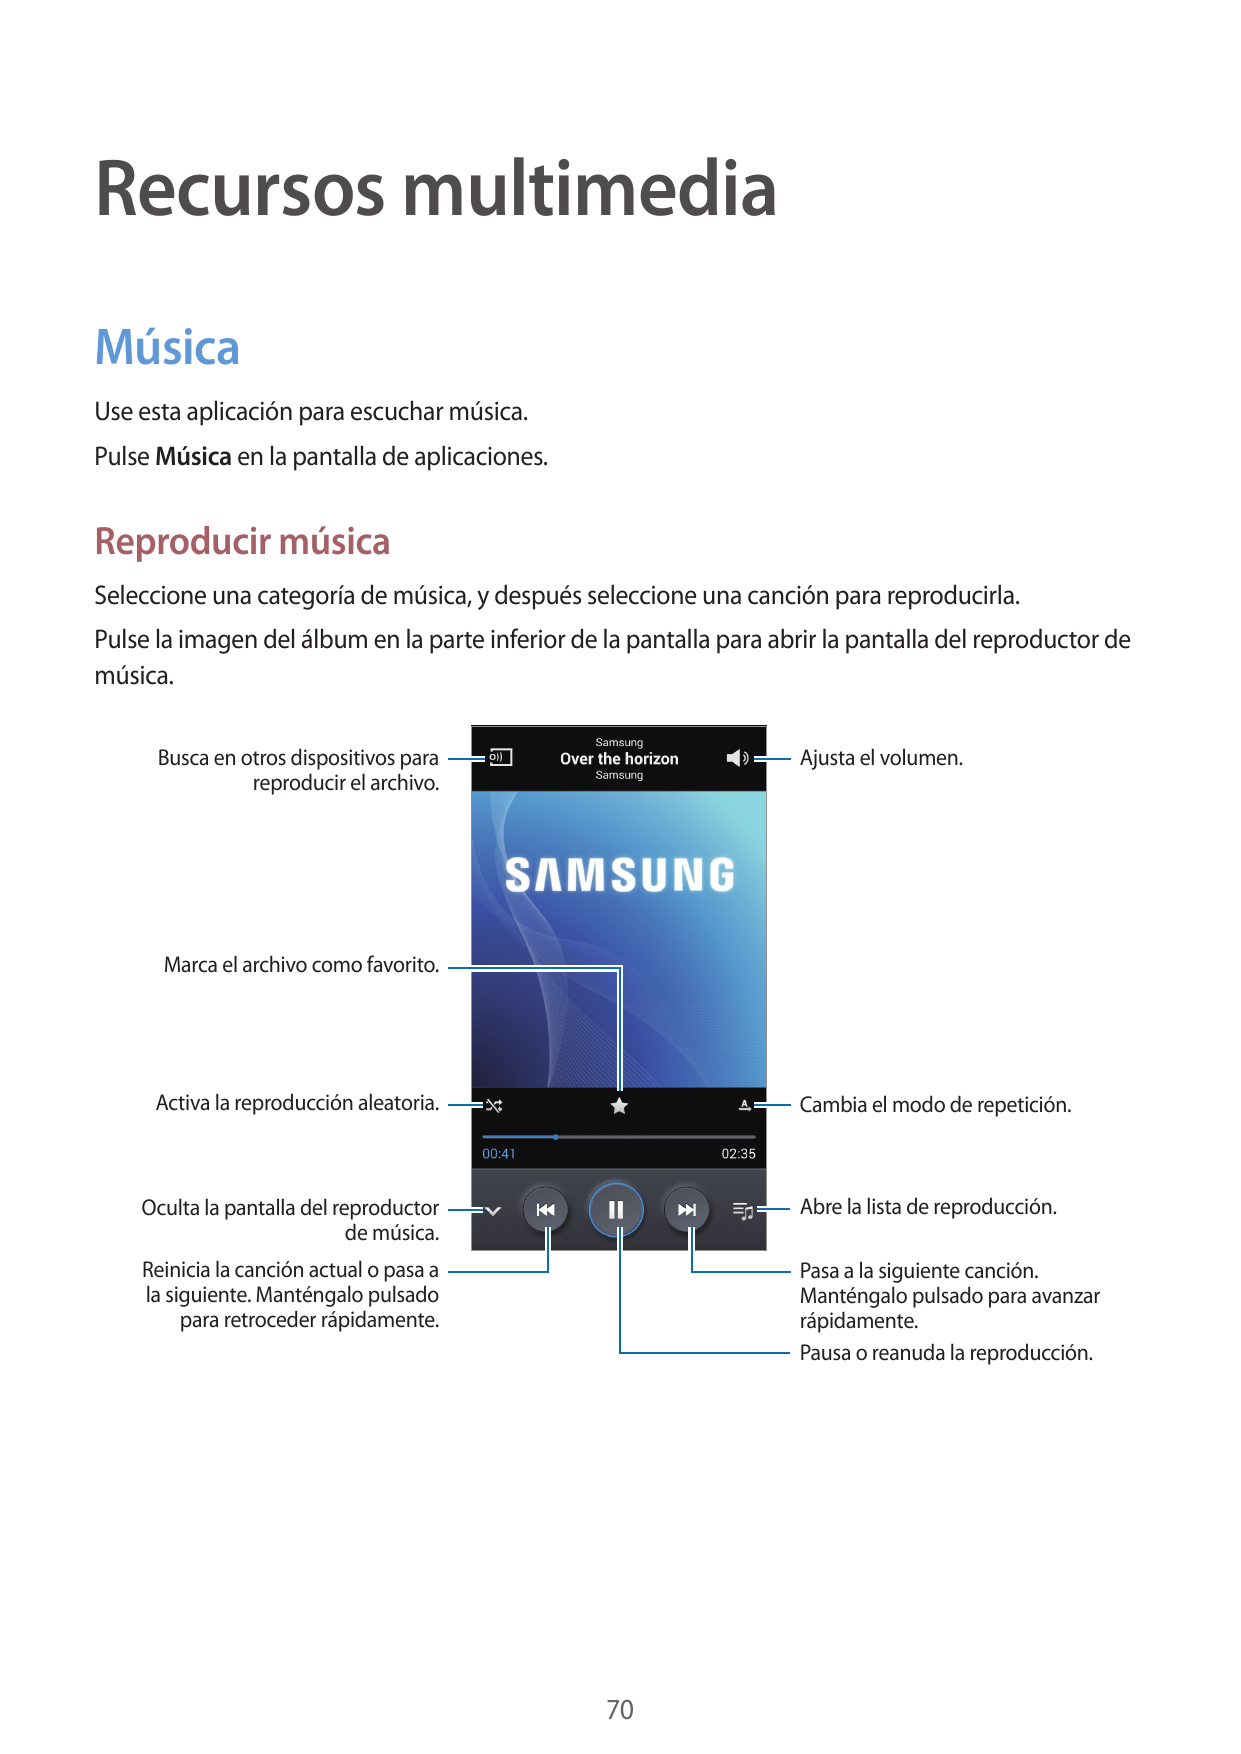 Recursos multimediaMúsicaUse esta aplicación para escuchar música.Pulse Música en la pantalla de aplicaciones.Reproducir músicaS